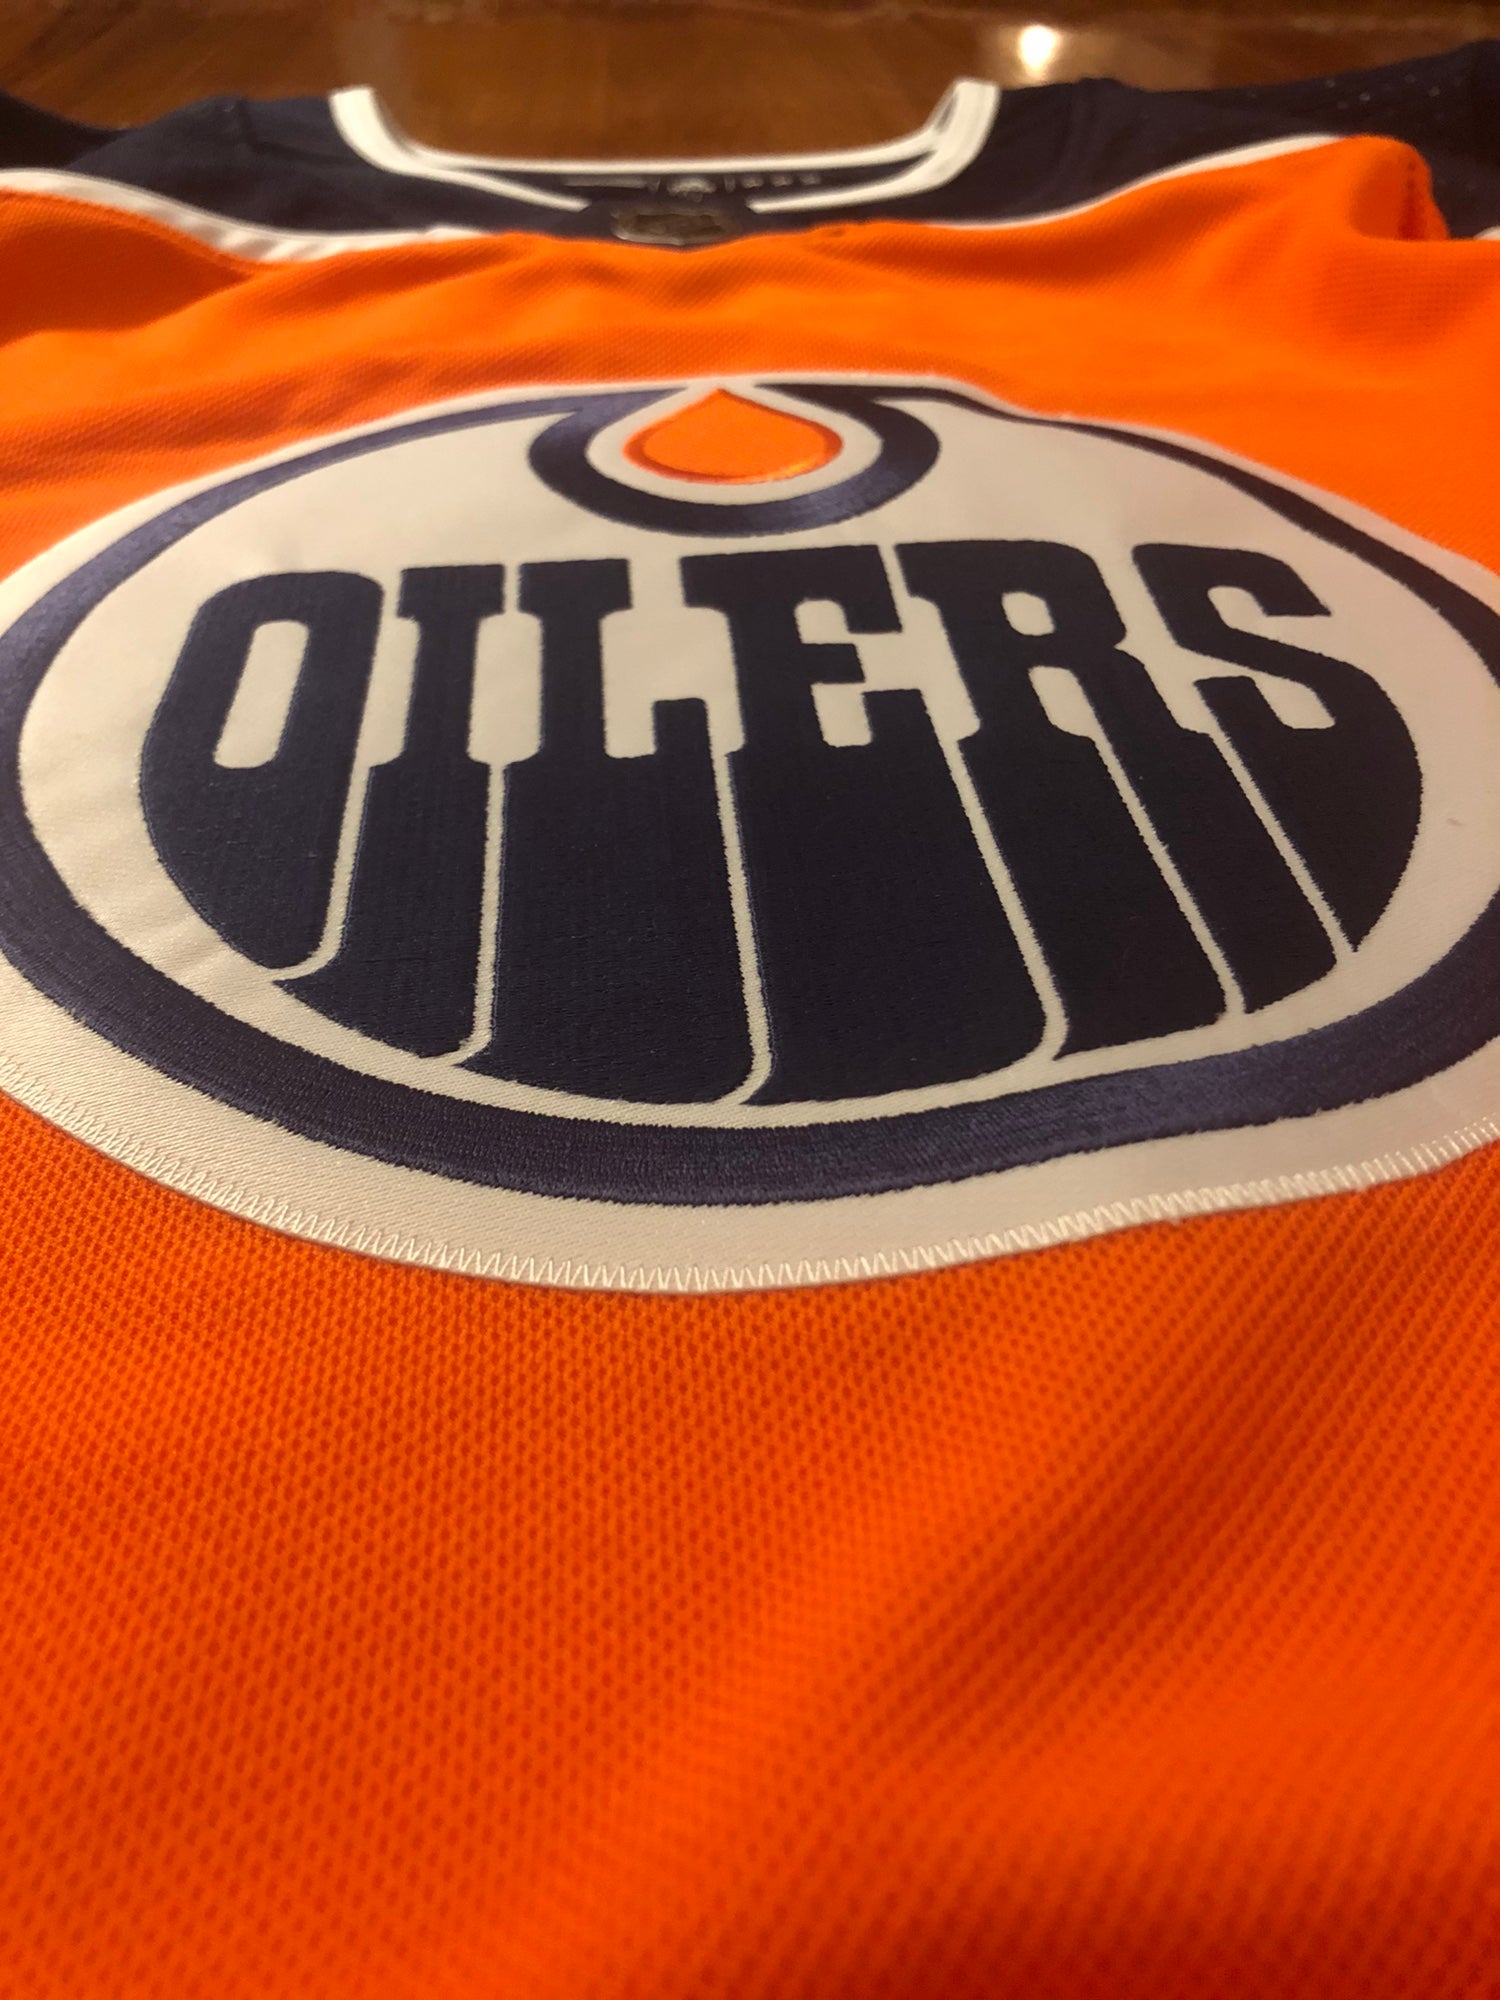 Authentic Adidas Edmonton Oilers HOME Milan Lucic #27 Orange jersey size 54  NWT